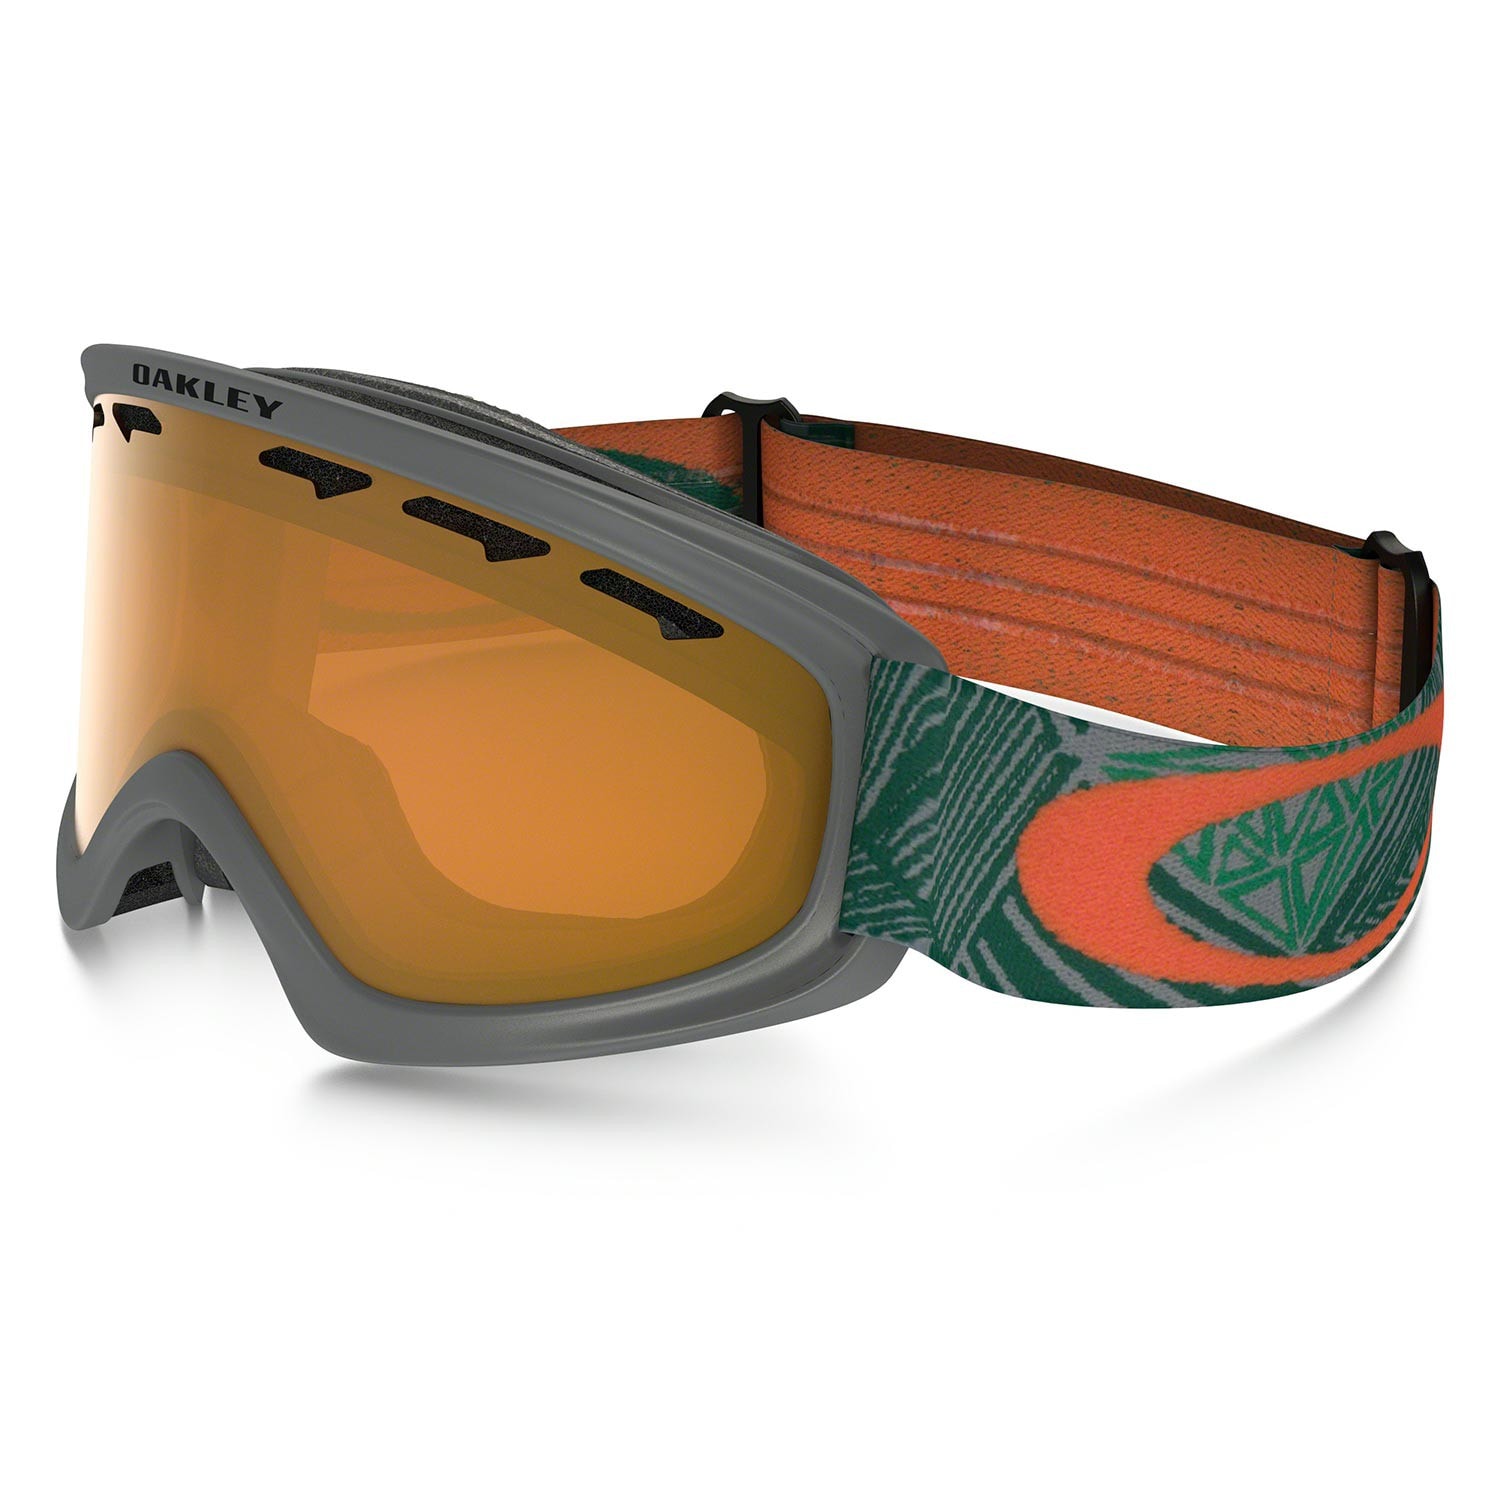 Goggles Oakley O2 Xs geos iron | Snowboard Zezula